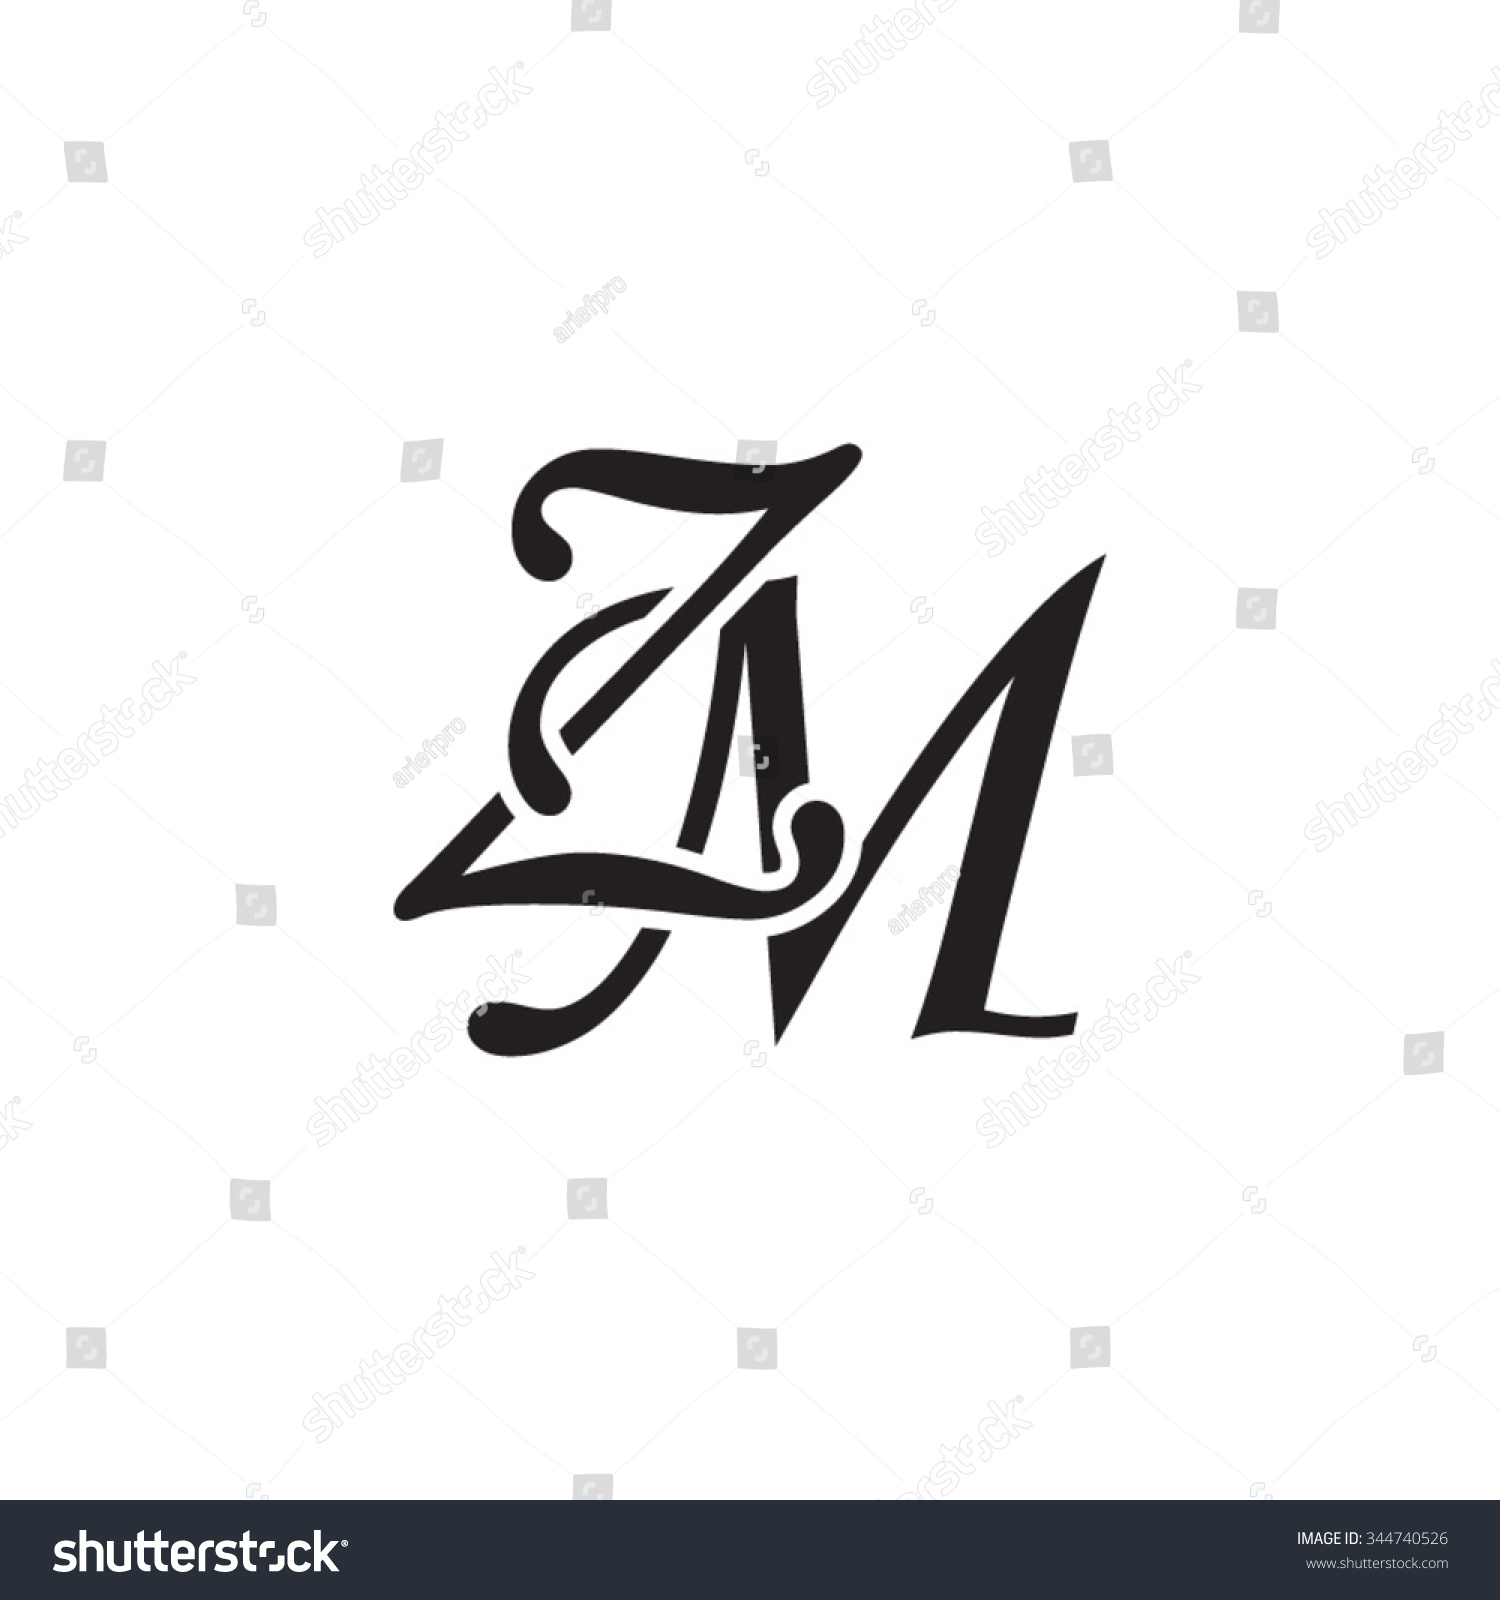 ZM Initial Monogram Logo Stock Vector (Royalty Free) 344740526